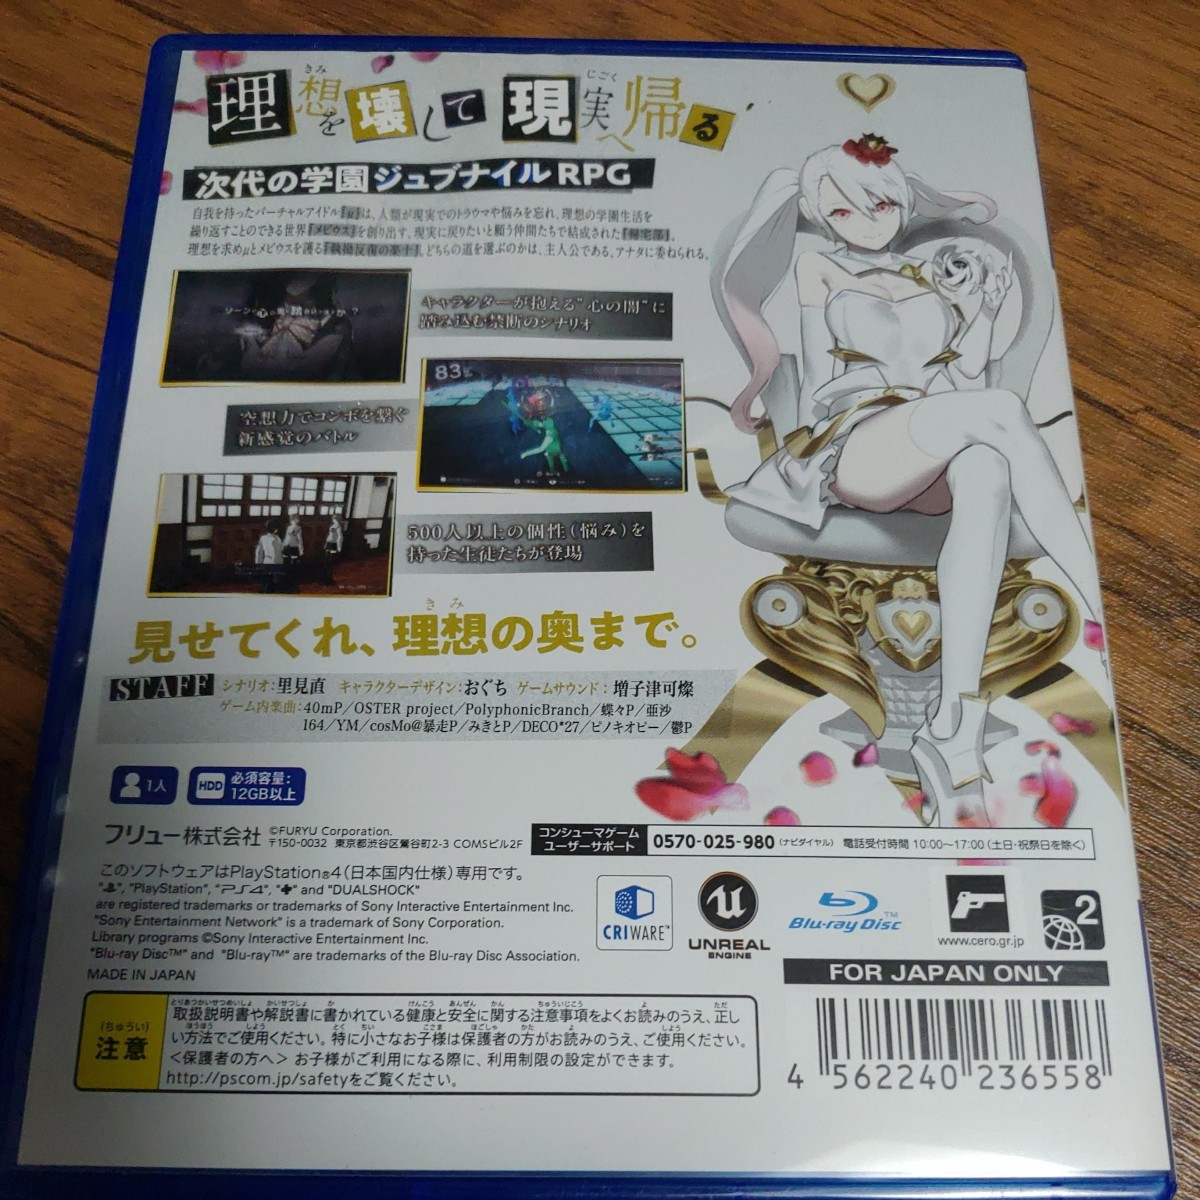 【PS4】 Caligula Overdose/カリギュラ オーバードーズ